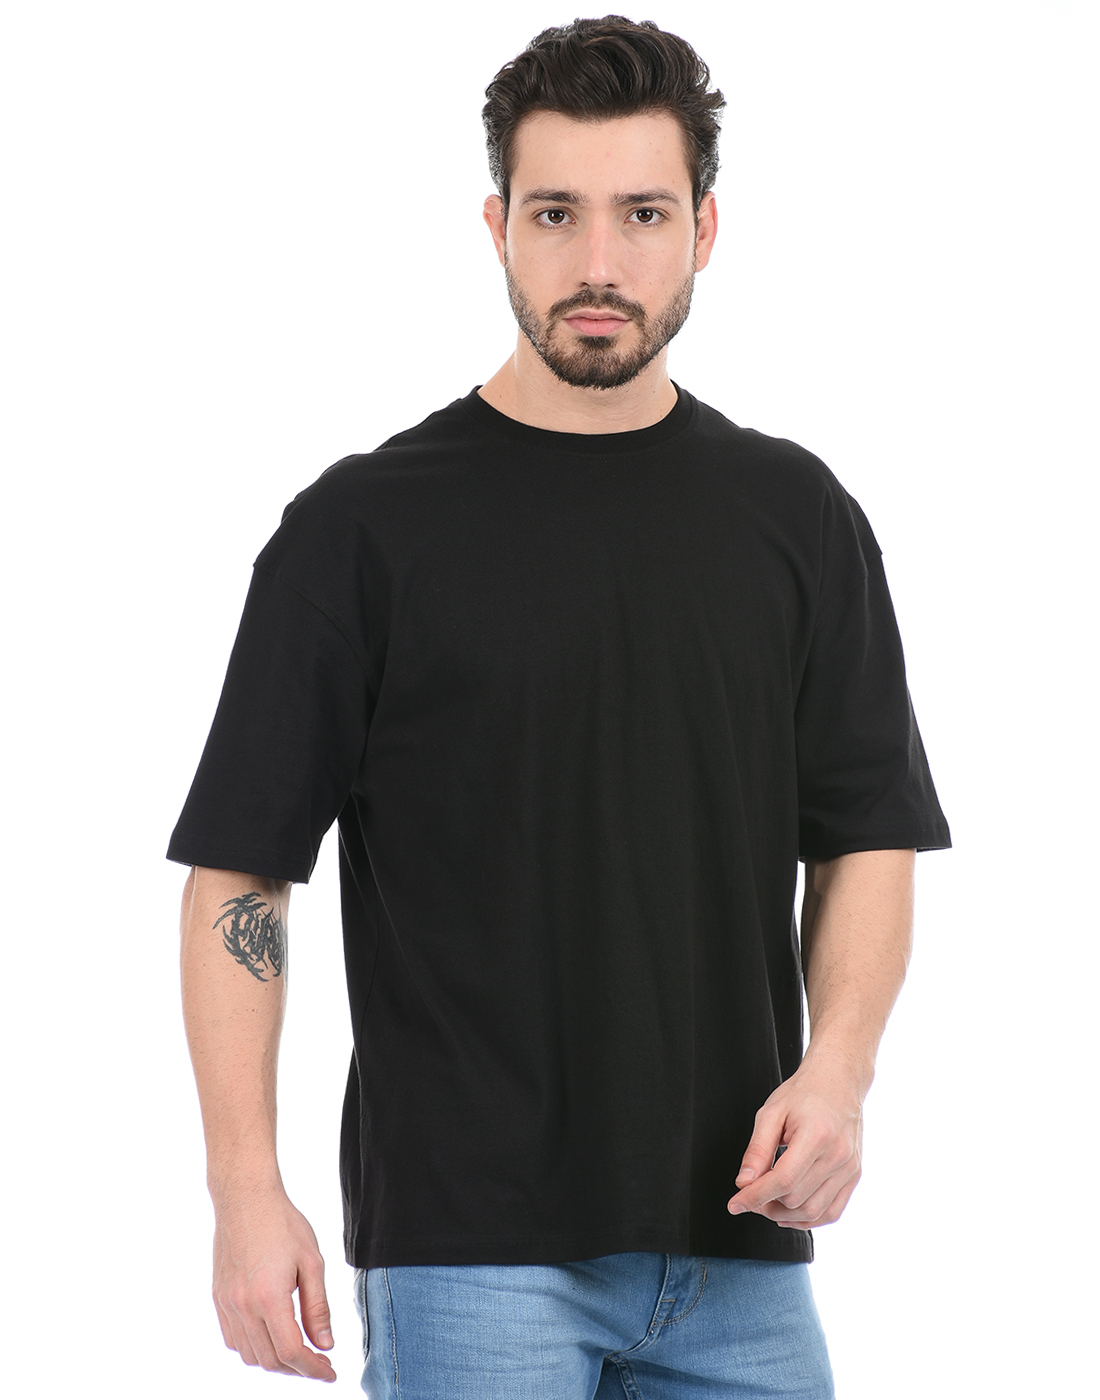 Oneway Unisex Solid Black T-Shirt